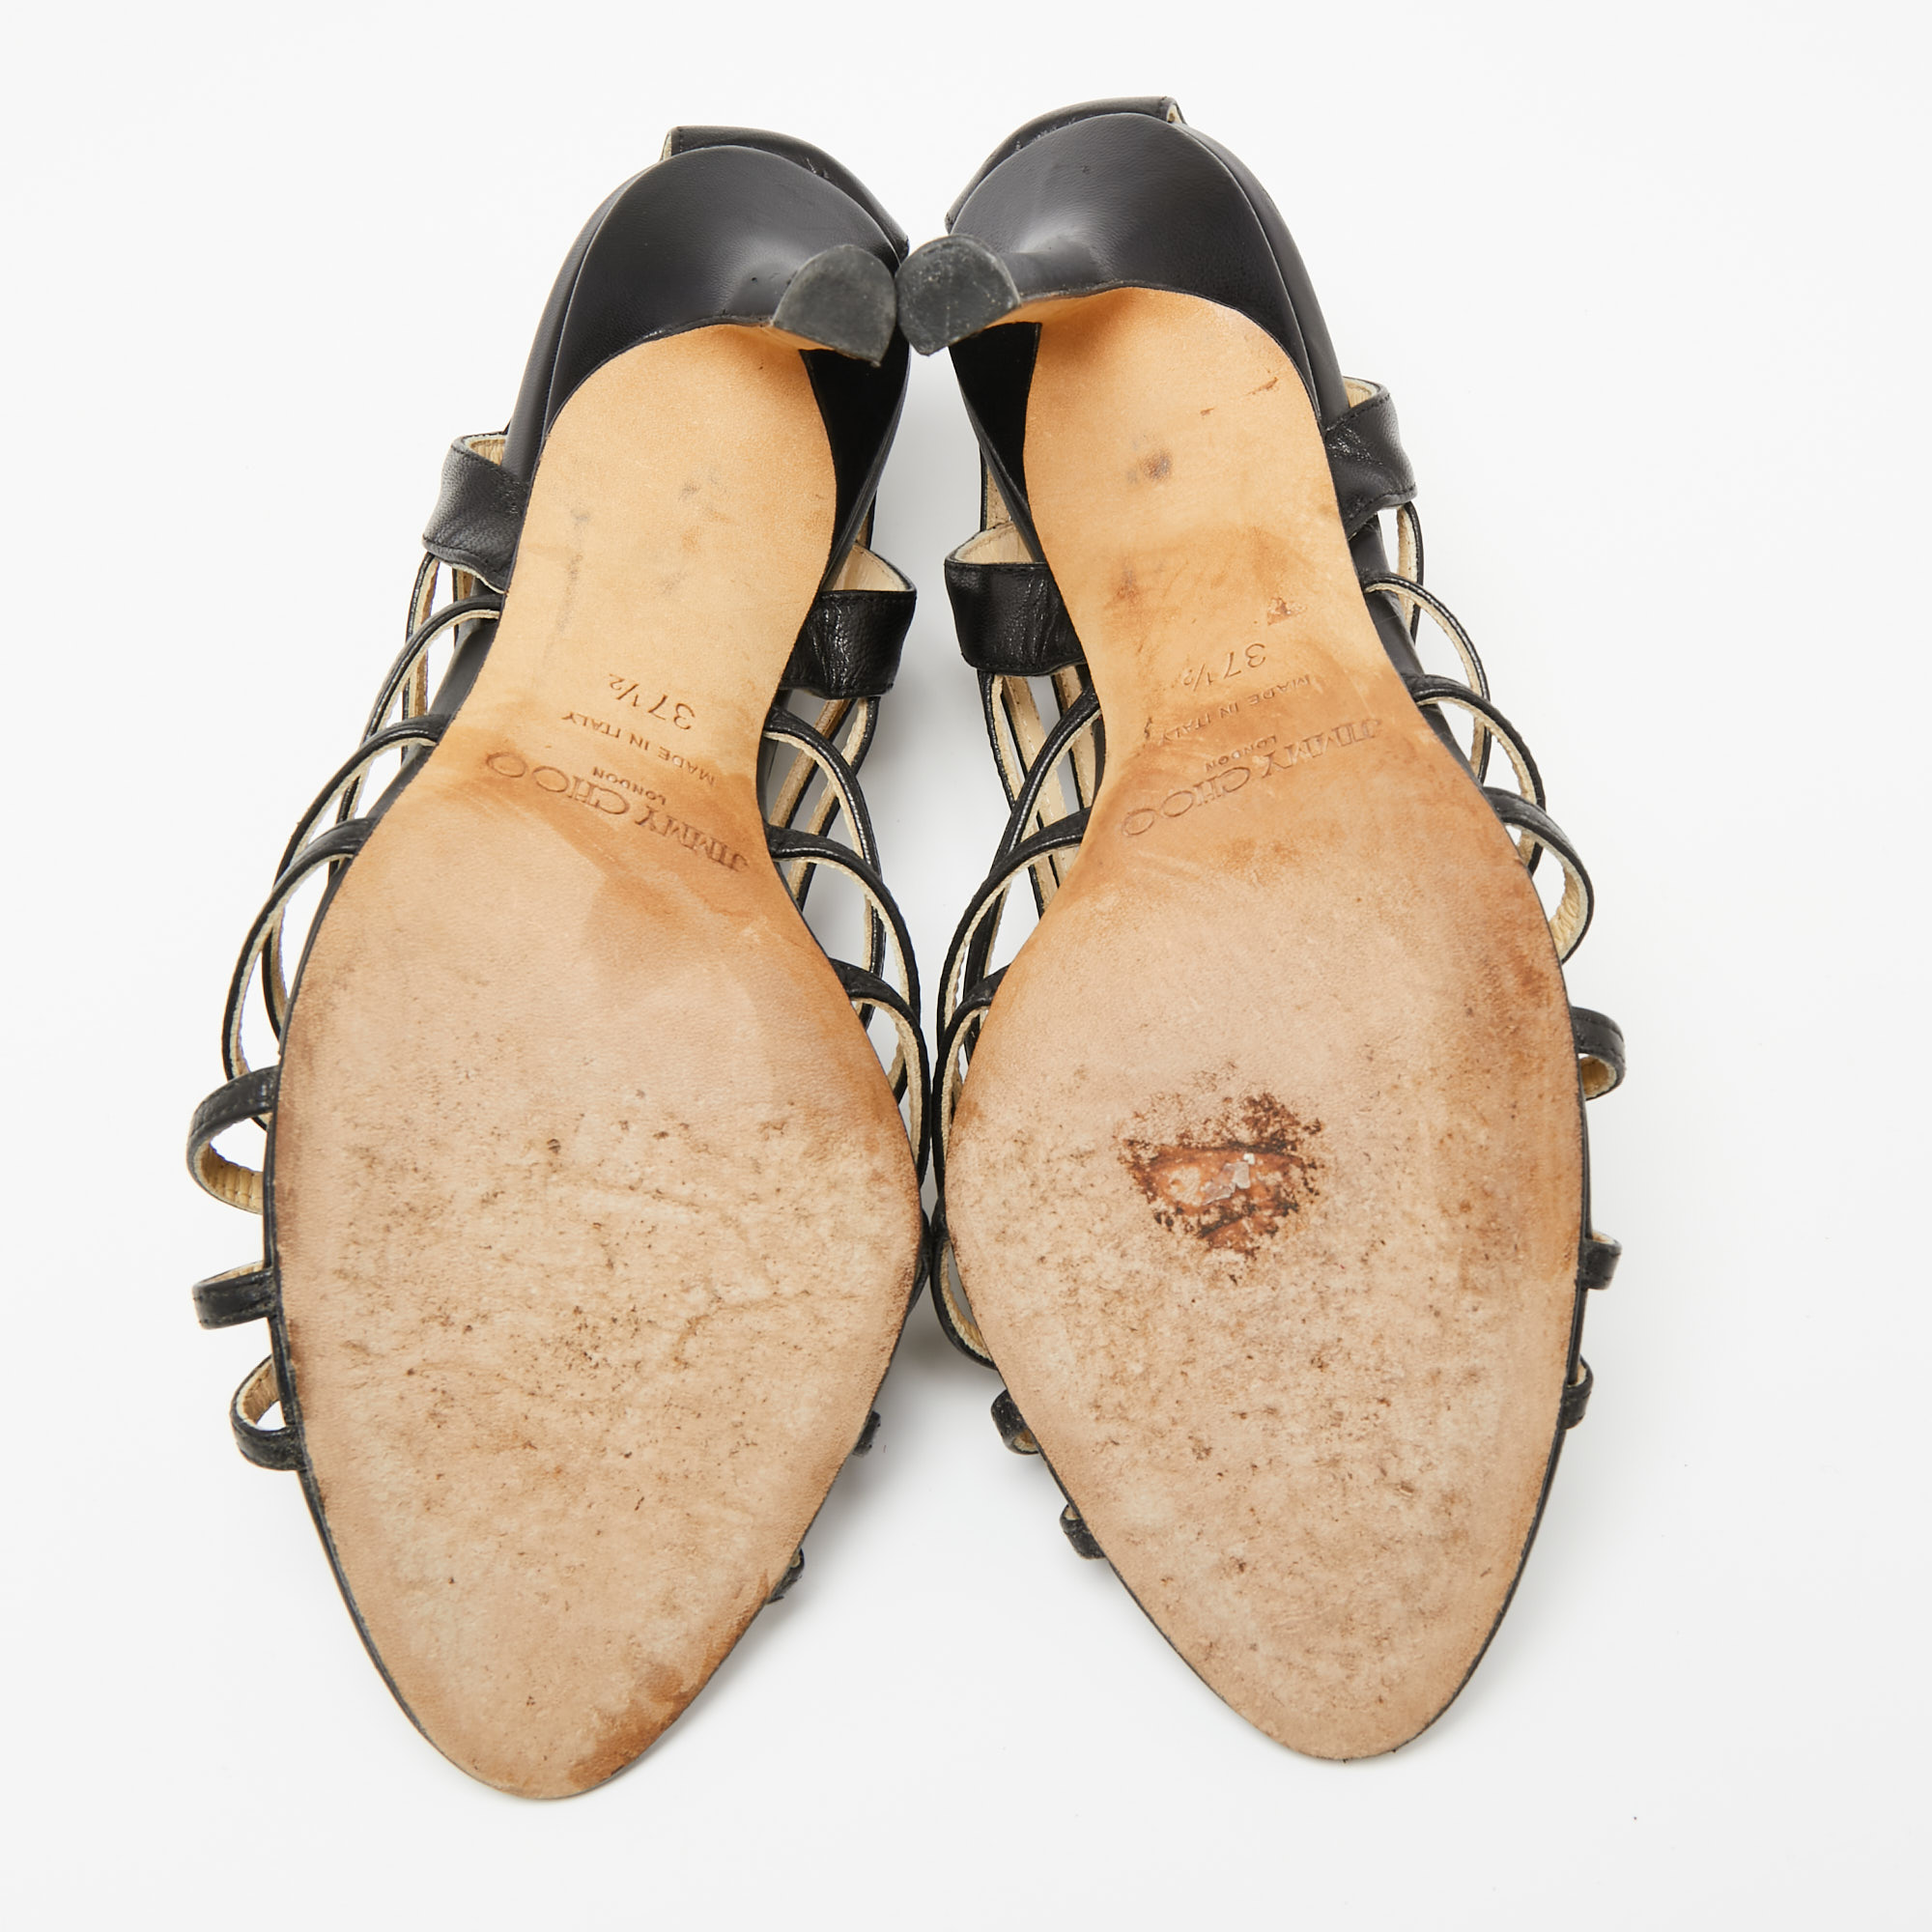 Jimmy Choo Black Leather Samoa Sandals Size 37.5